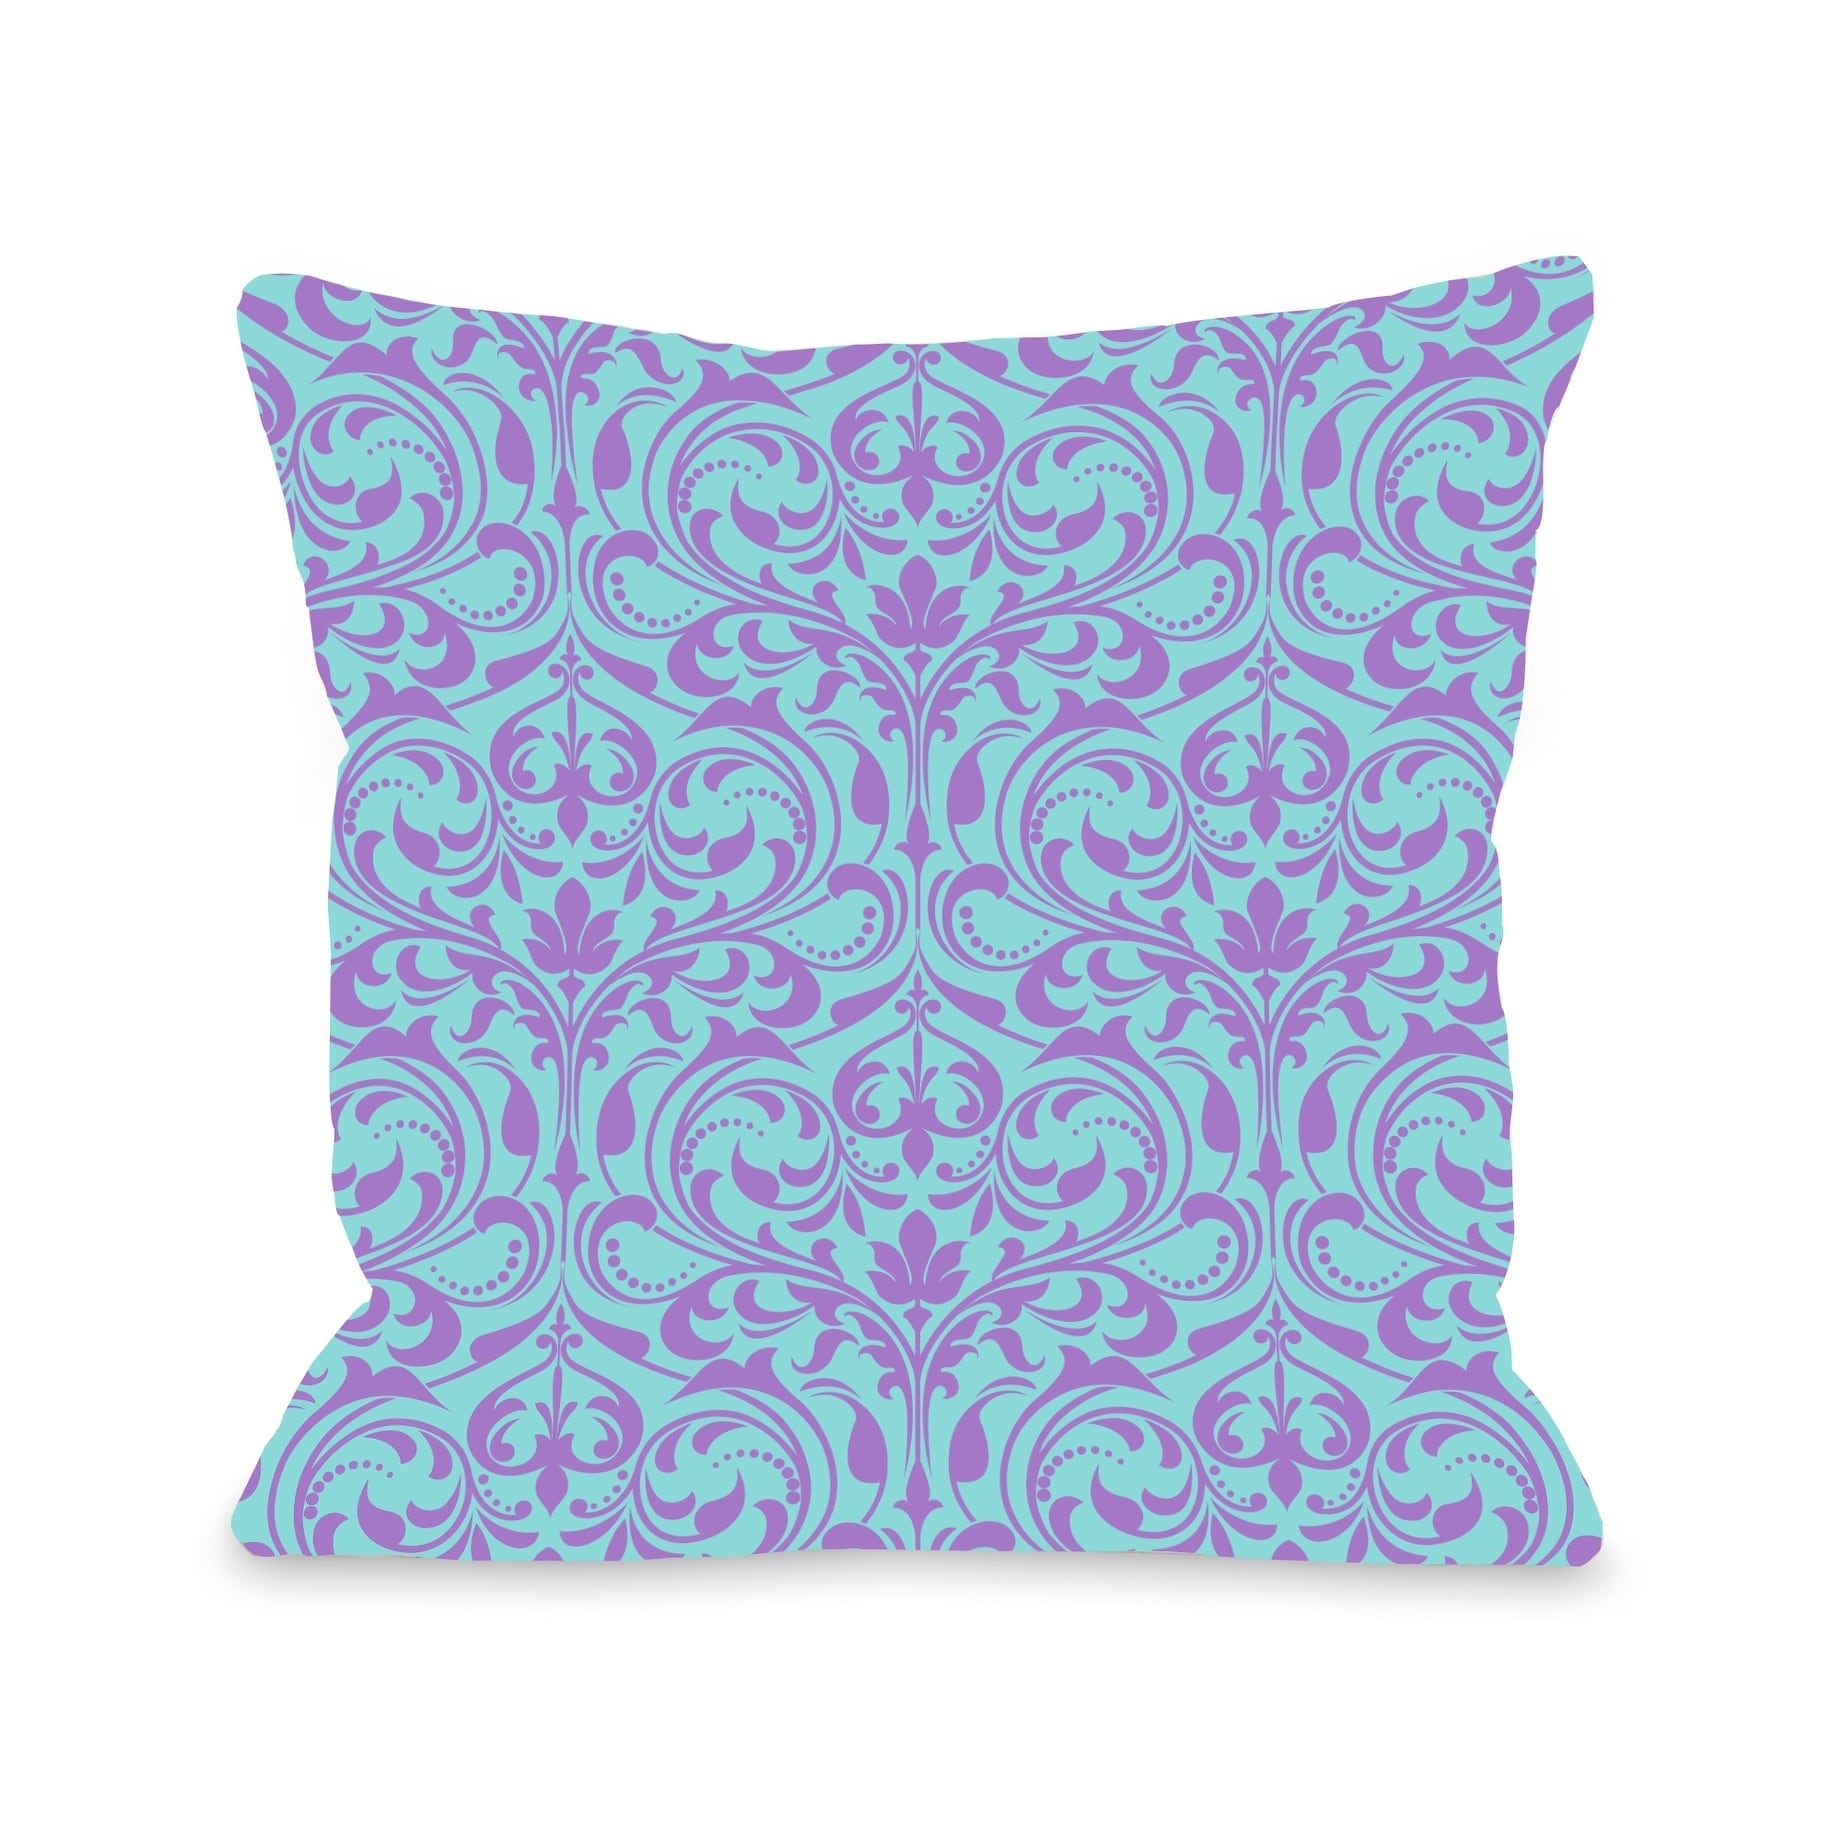 purple pillow add